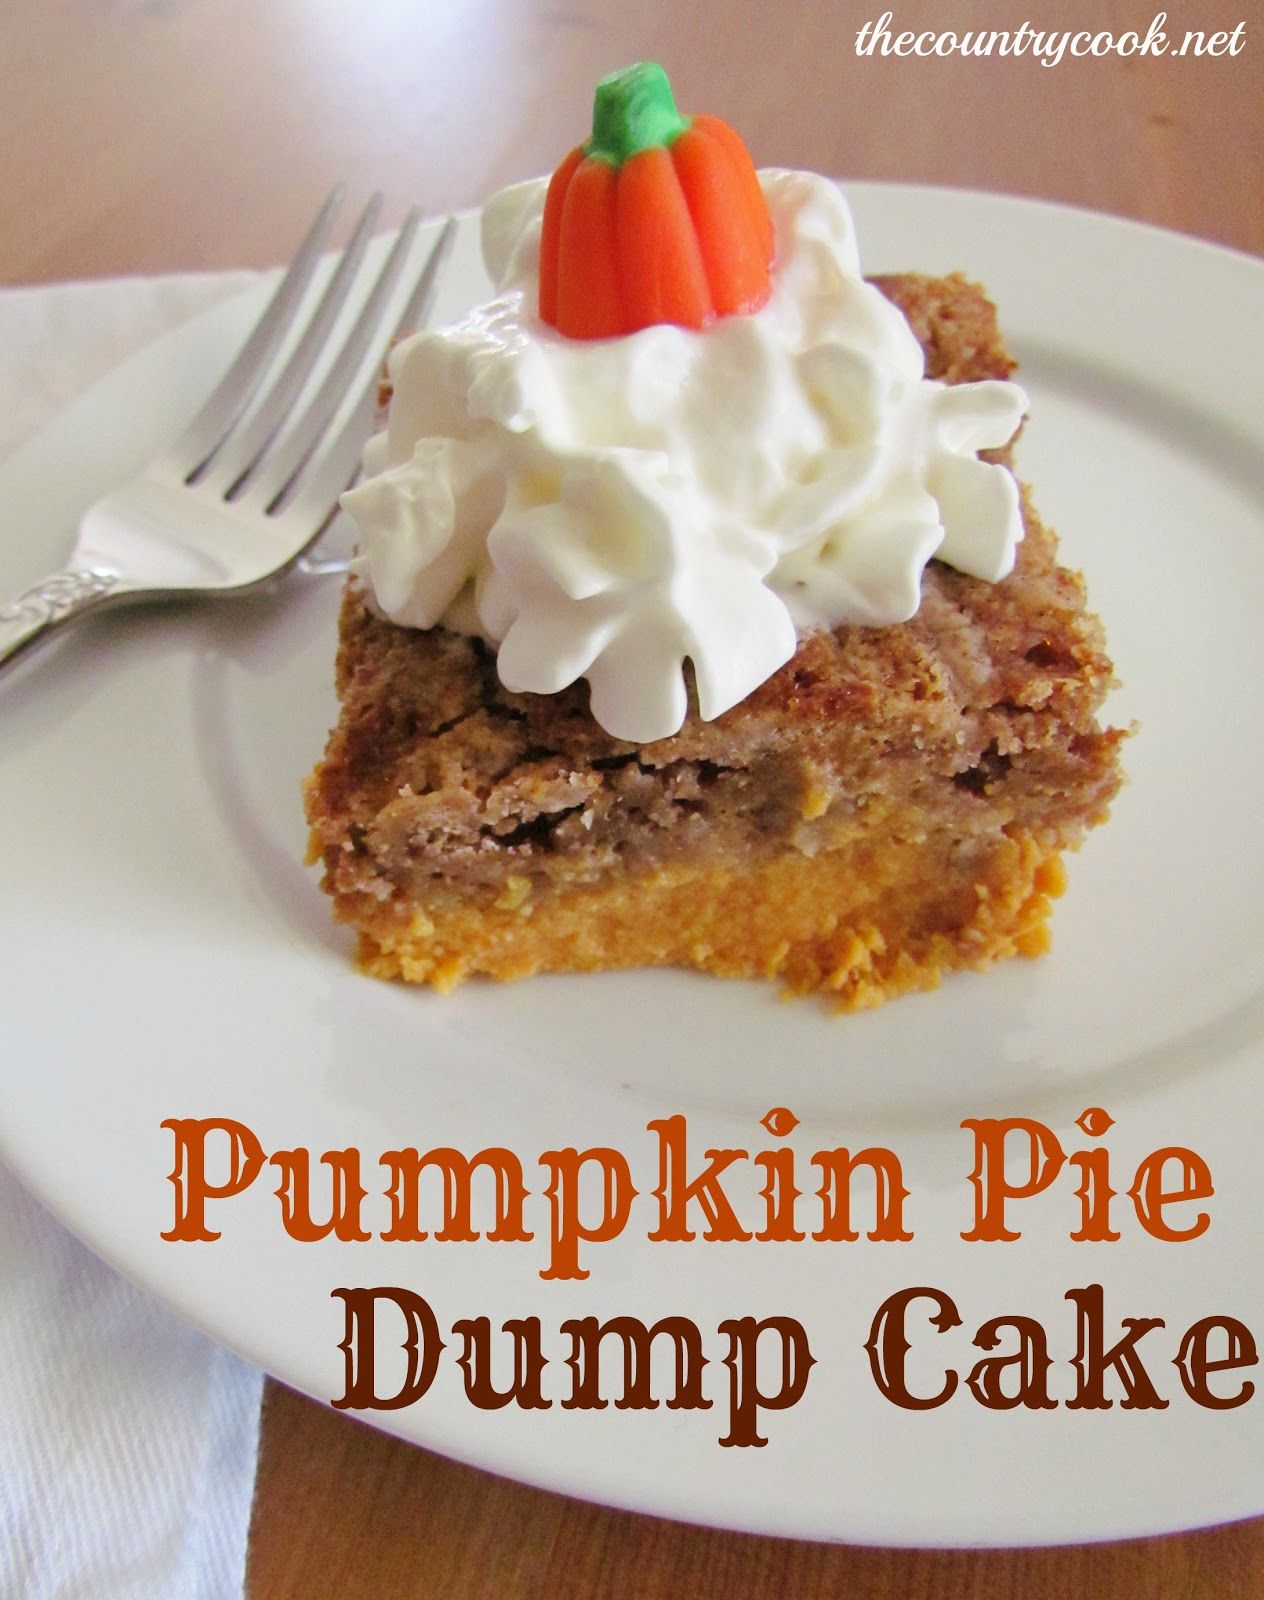 Pumpkin Pie Dump Cake